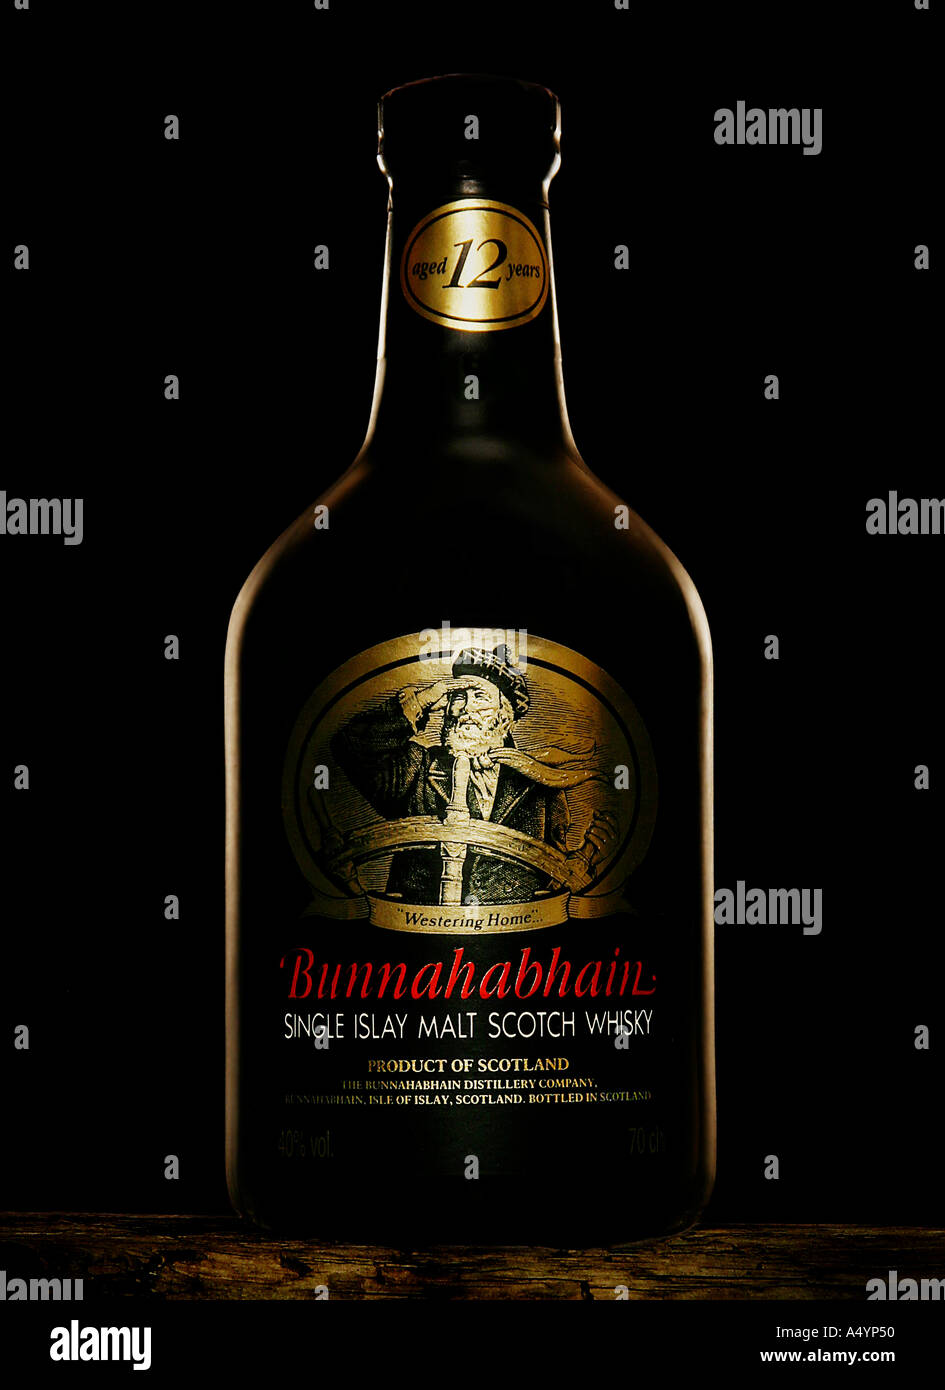 Bunnahabhain whisky whiskey bottle pack shot with black background soft side lighting Scotland 2005 Stock Photo